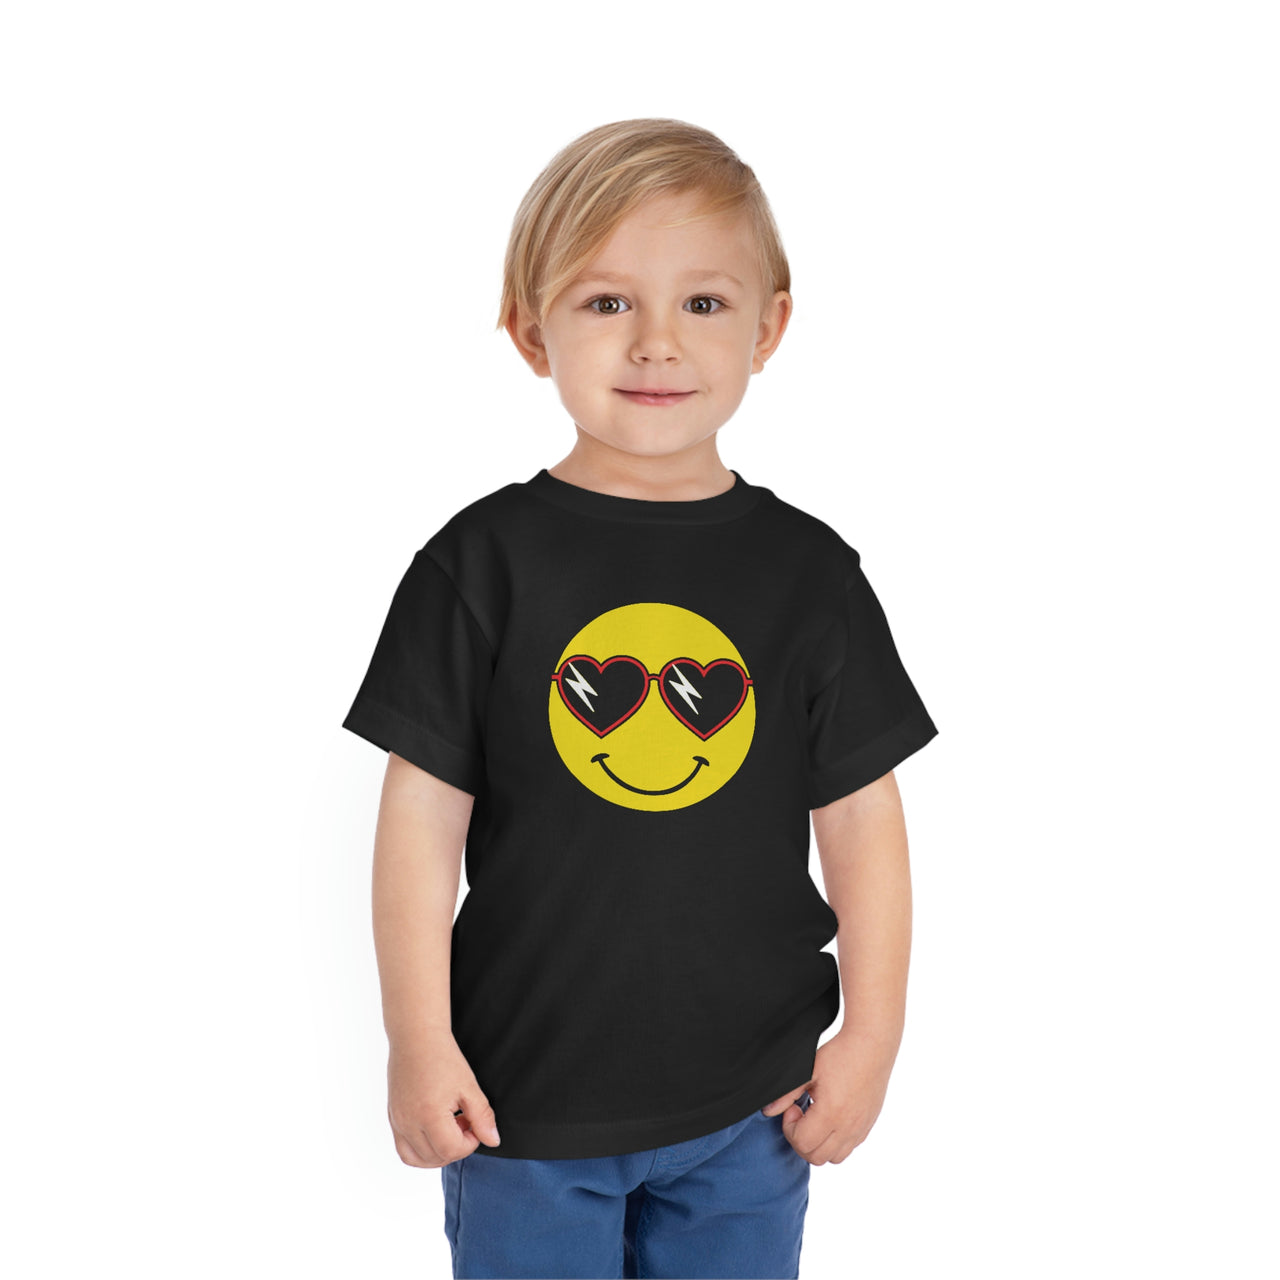 Toddler Valentine T-Shirt, Smiley Face Heart Glasses